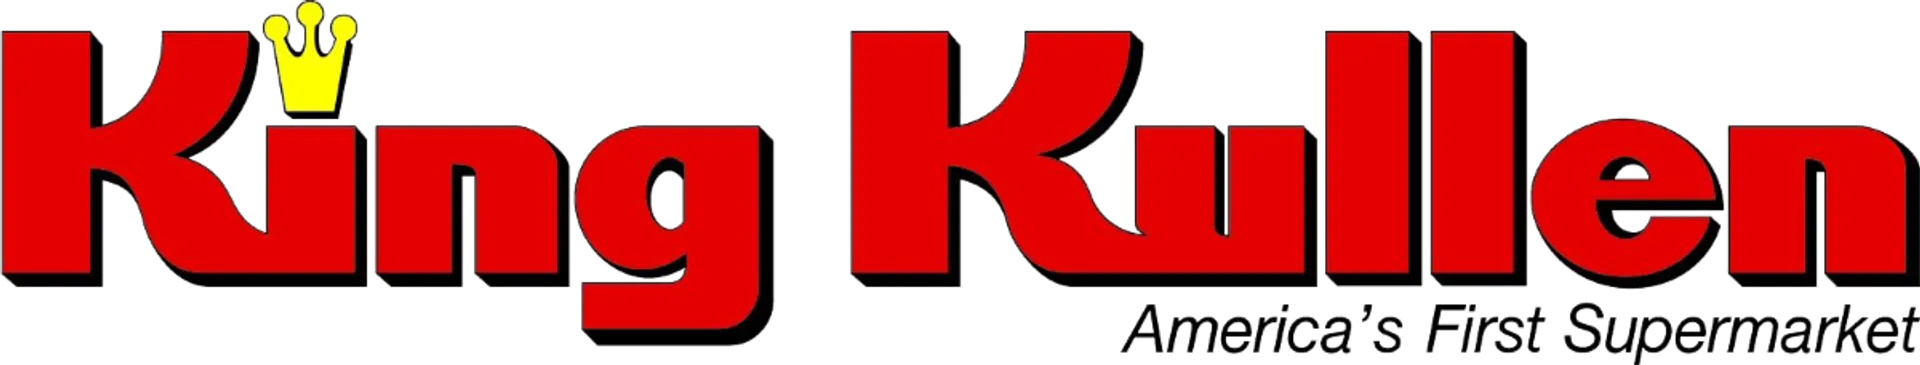 KING KULLEN logo. Current weekly ad